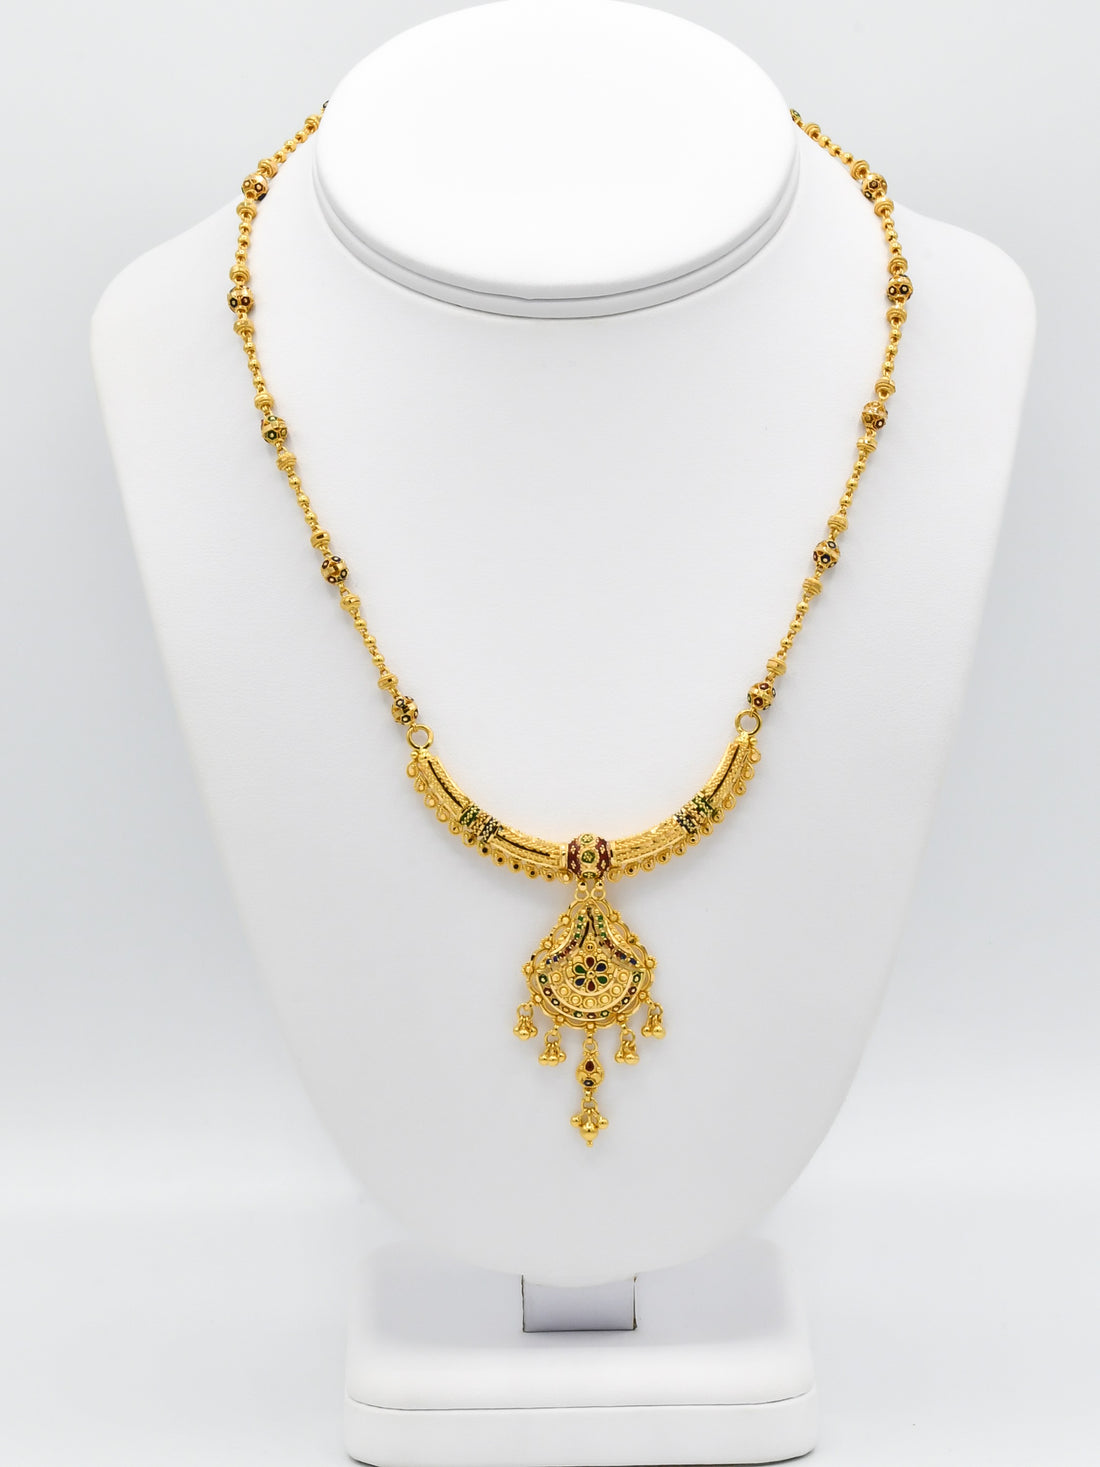 22ct Gold Minakari Necklace Set - Roop Darshan